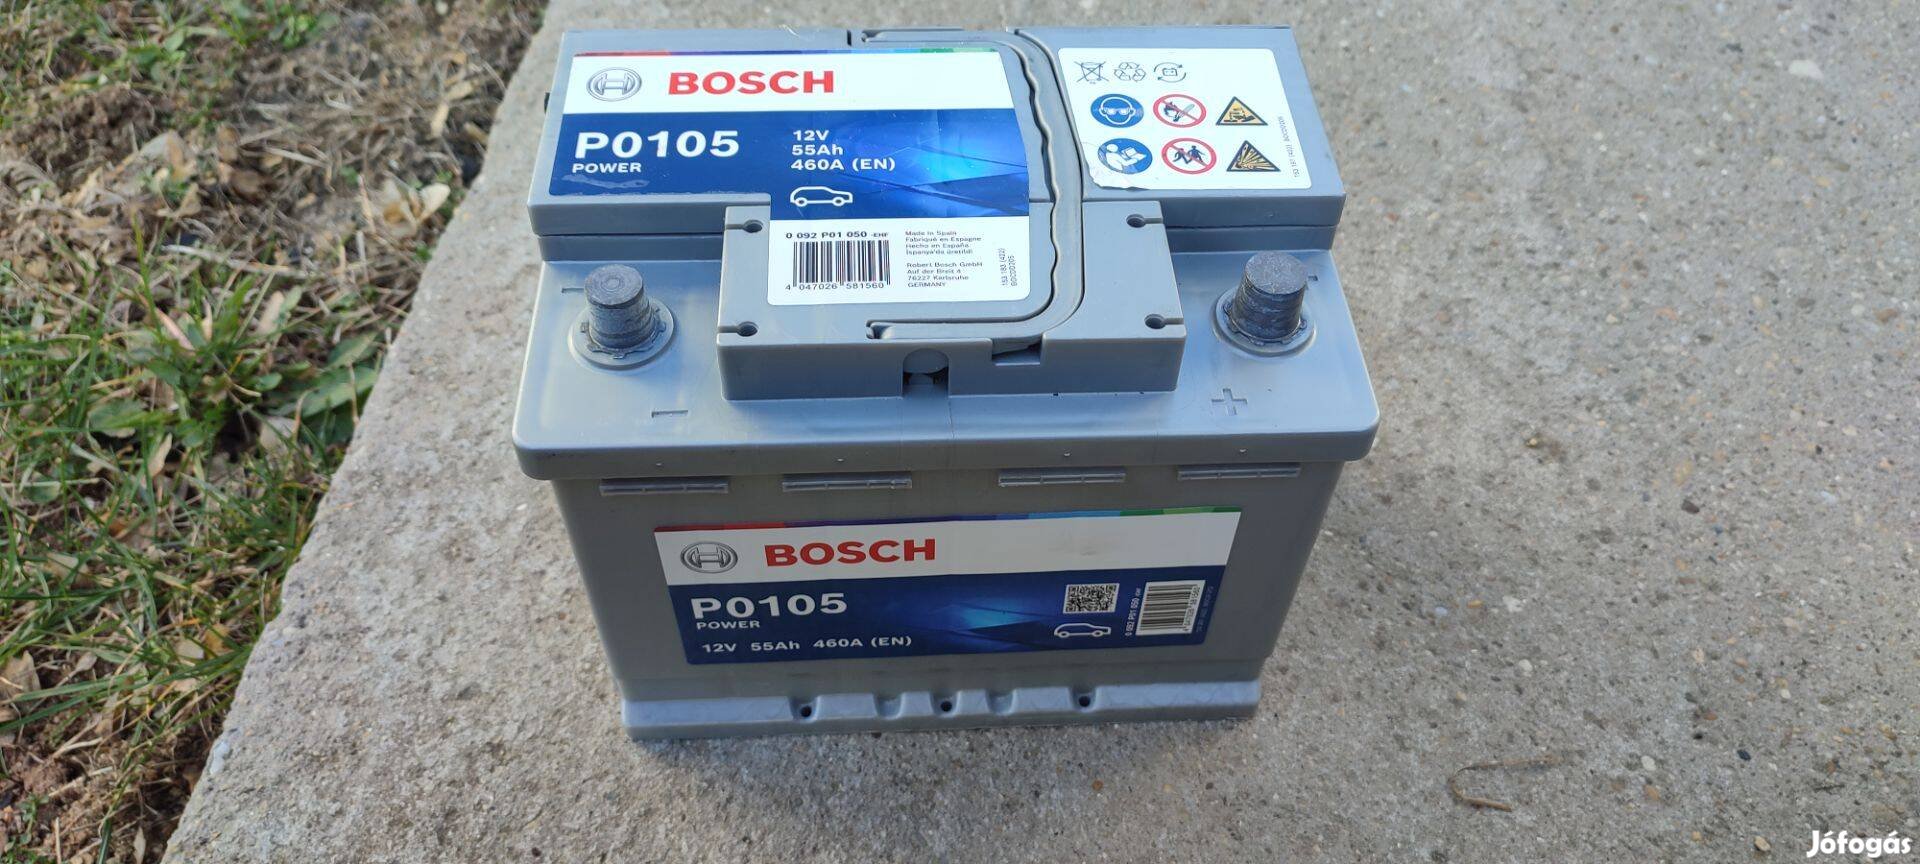 Bosch 0105 akkumulátor